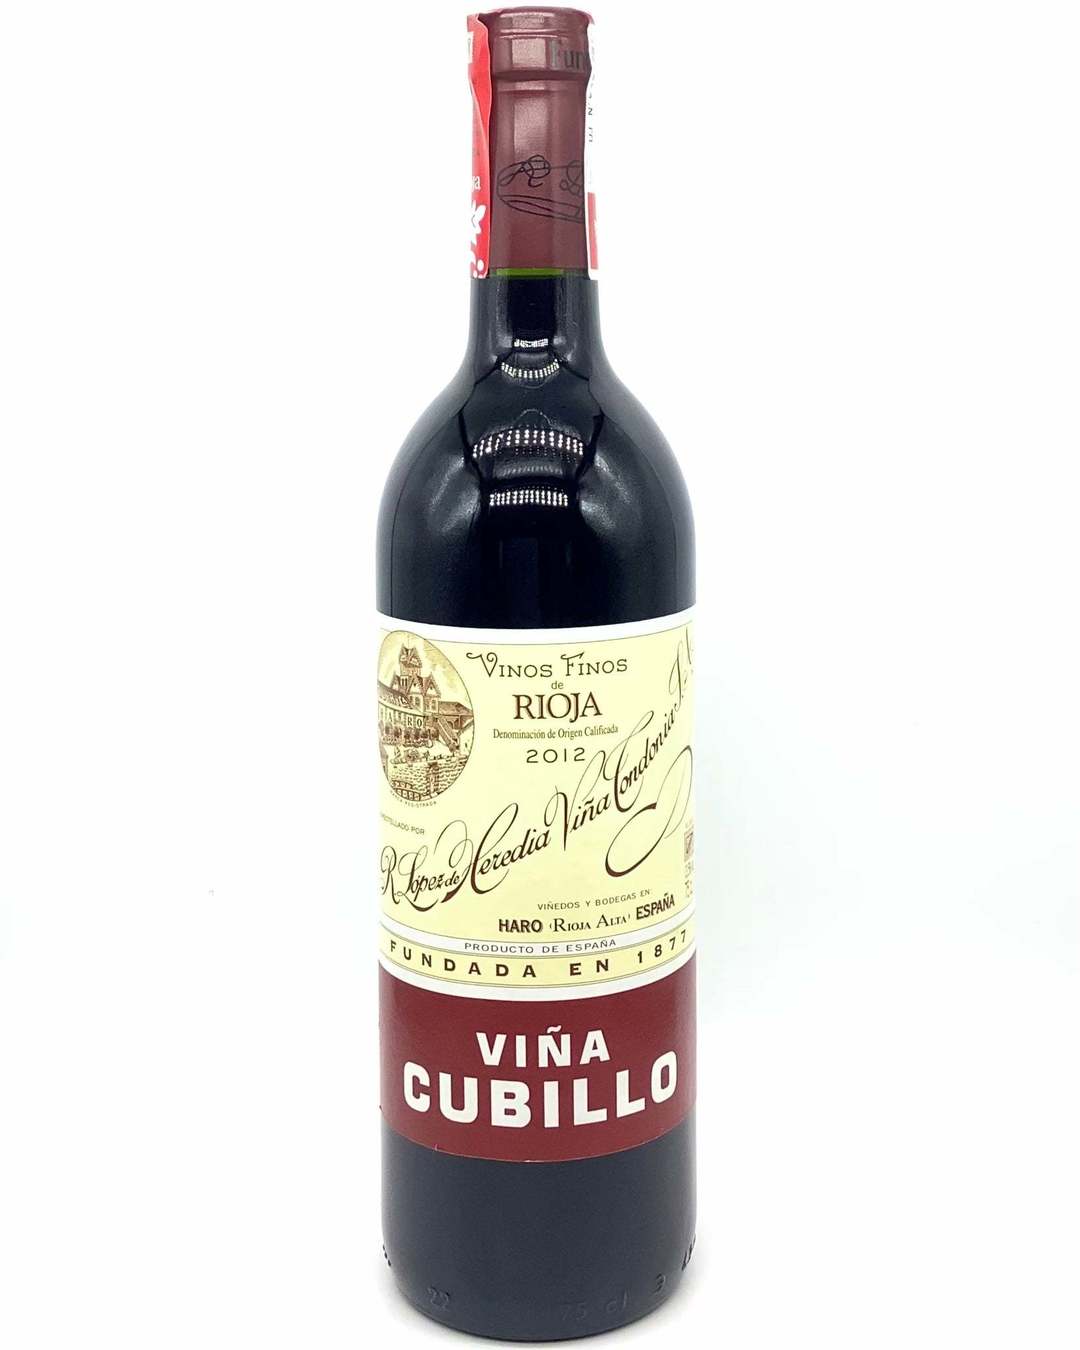 R. Lopez de Heredia "Viña Cubillo" Rioja, Spain 2014